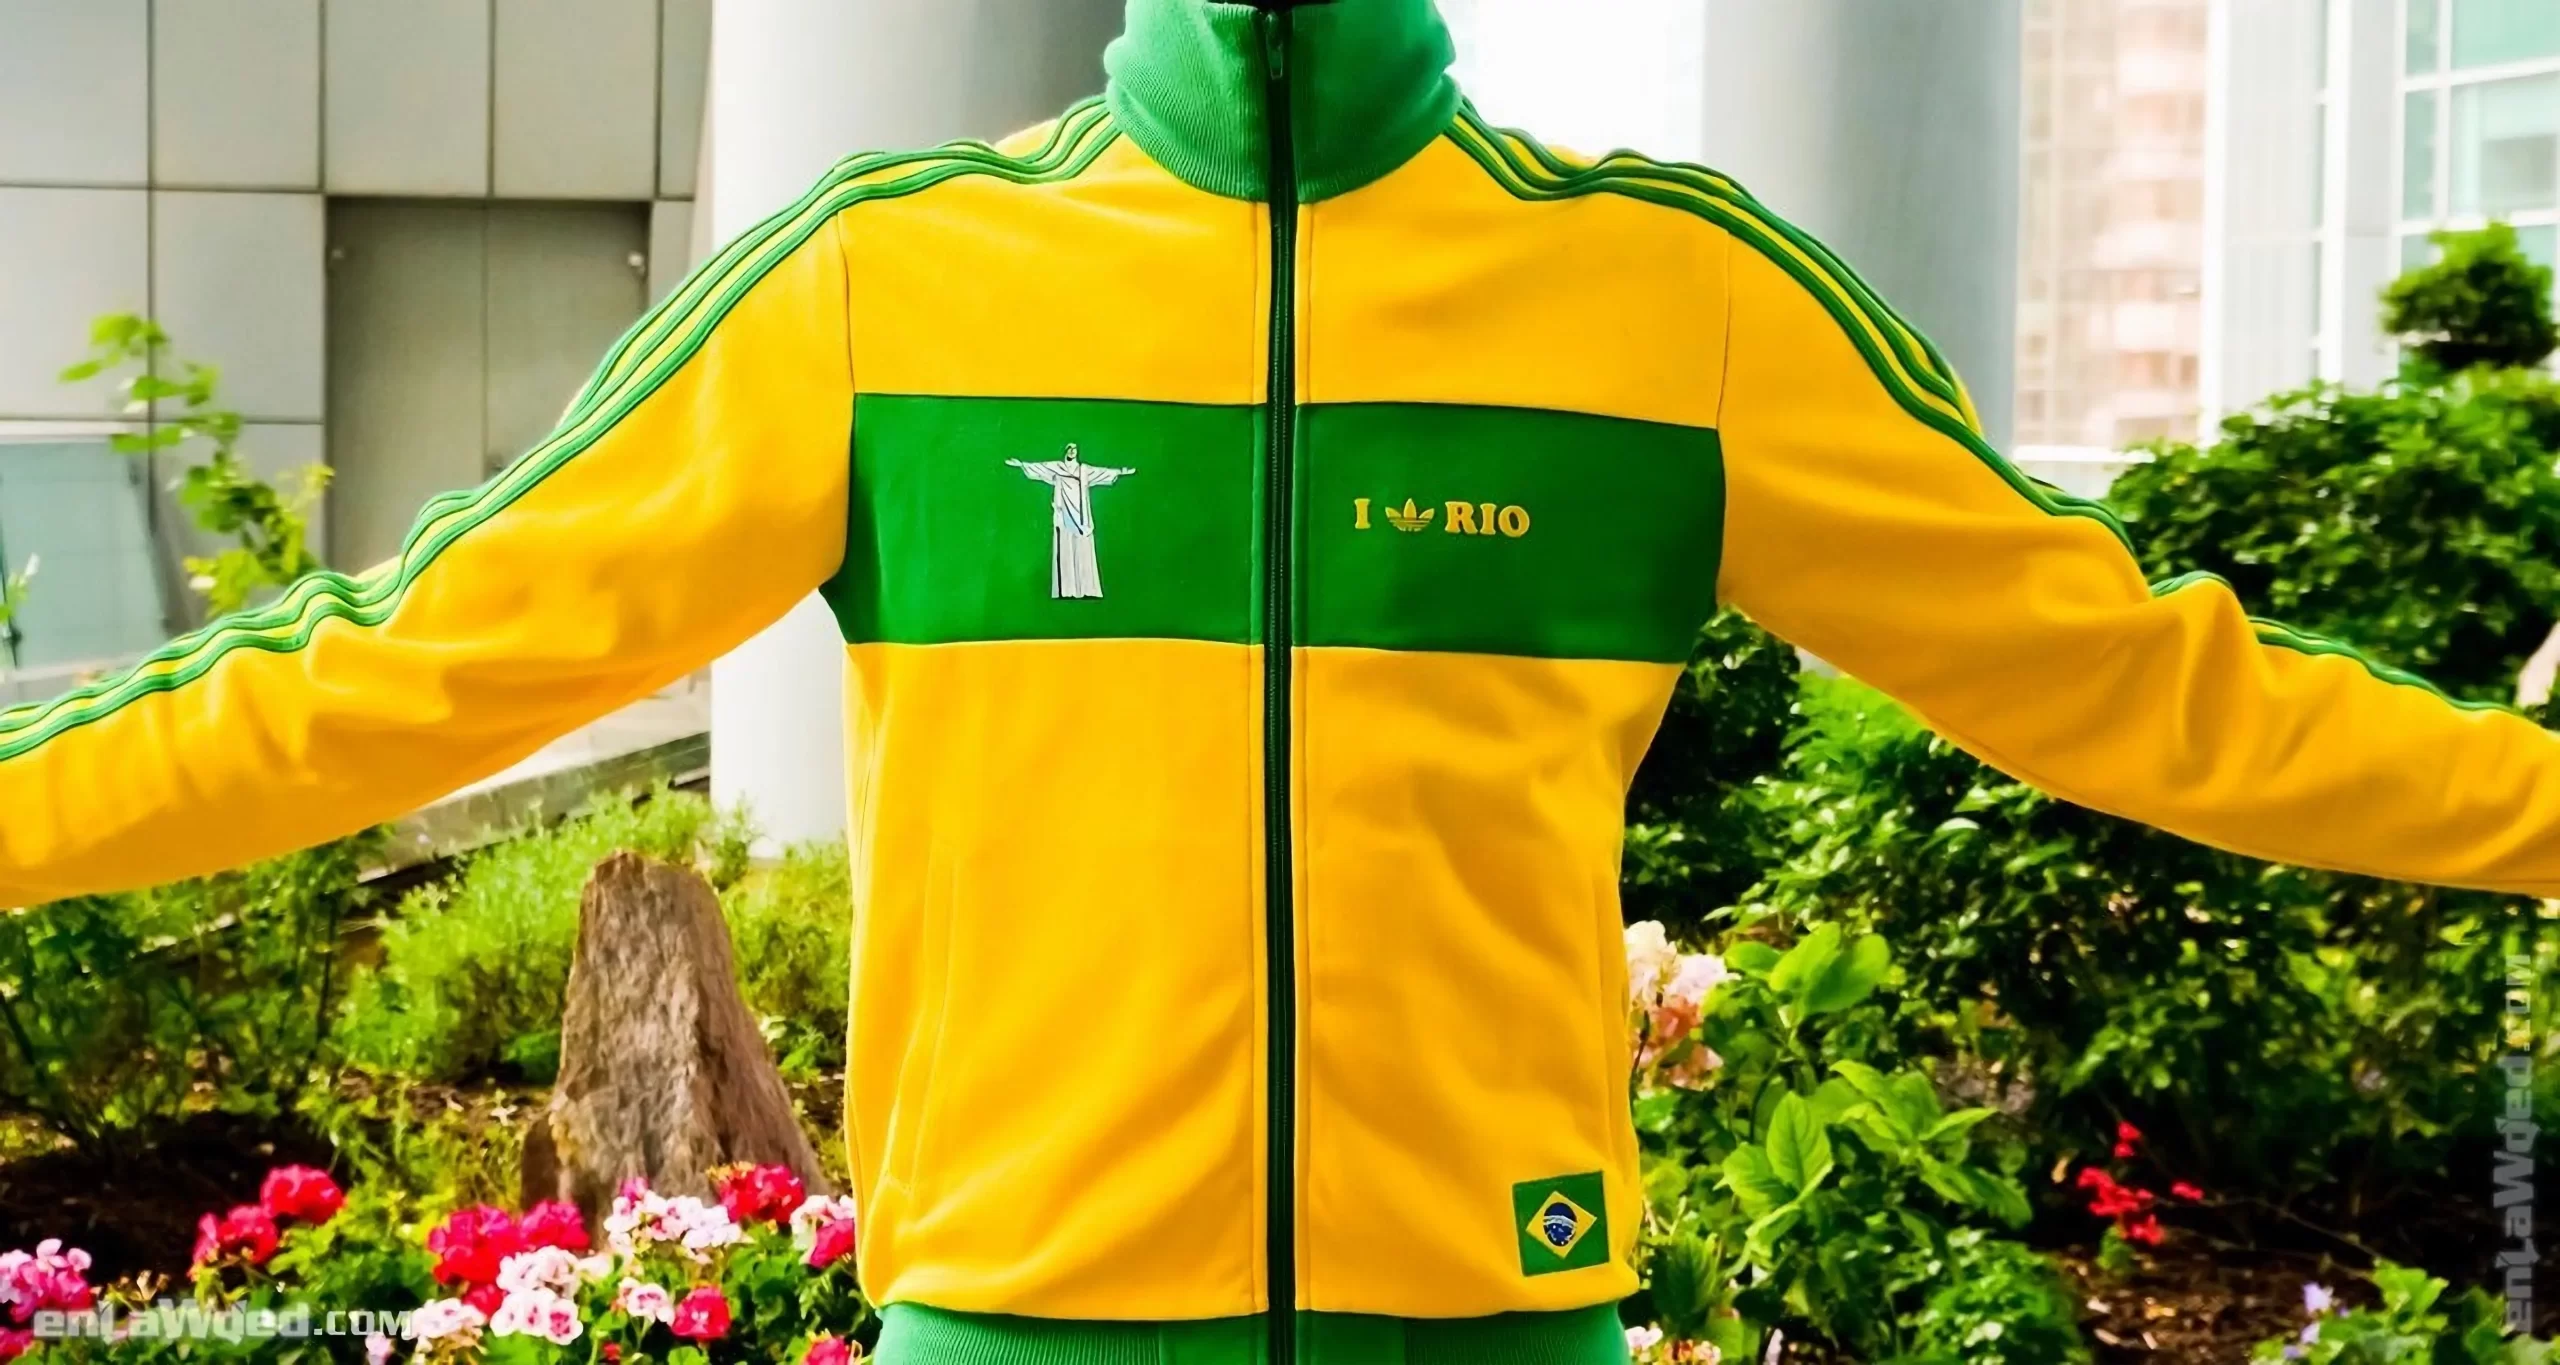 Men’s 2006 Rio de Janeiro TT-Two by Adidas Originals: Tremendous (EnLawded.com file #lmchk90421ip2y122326kg9st)